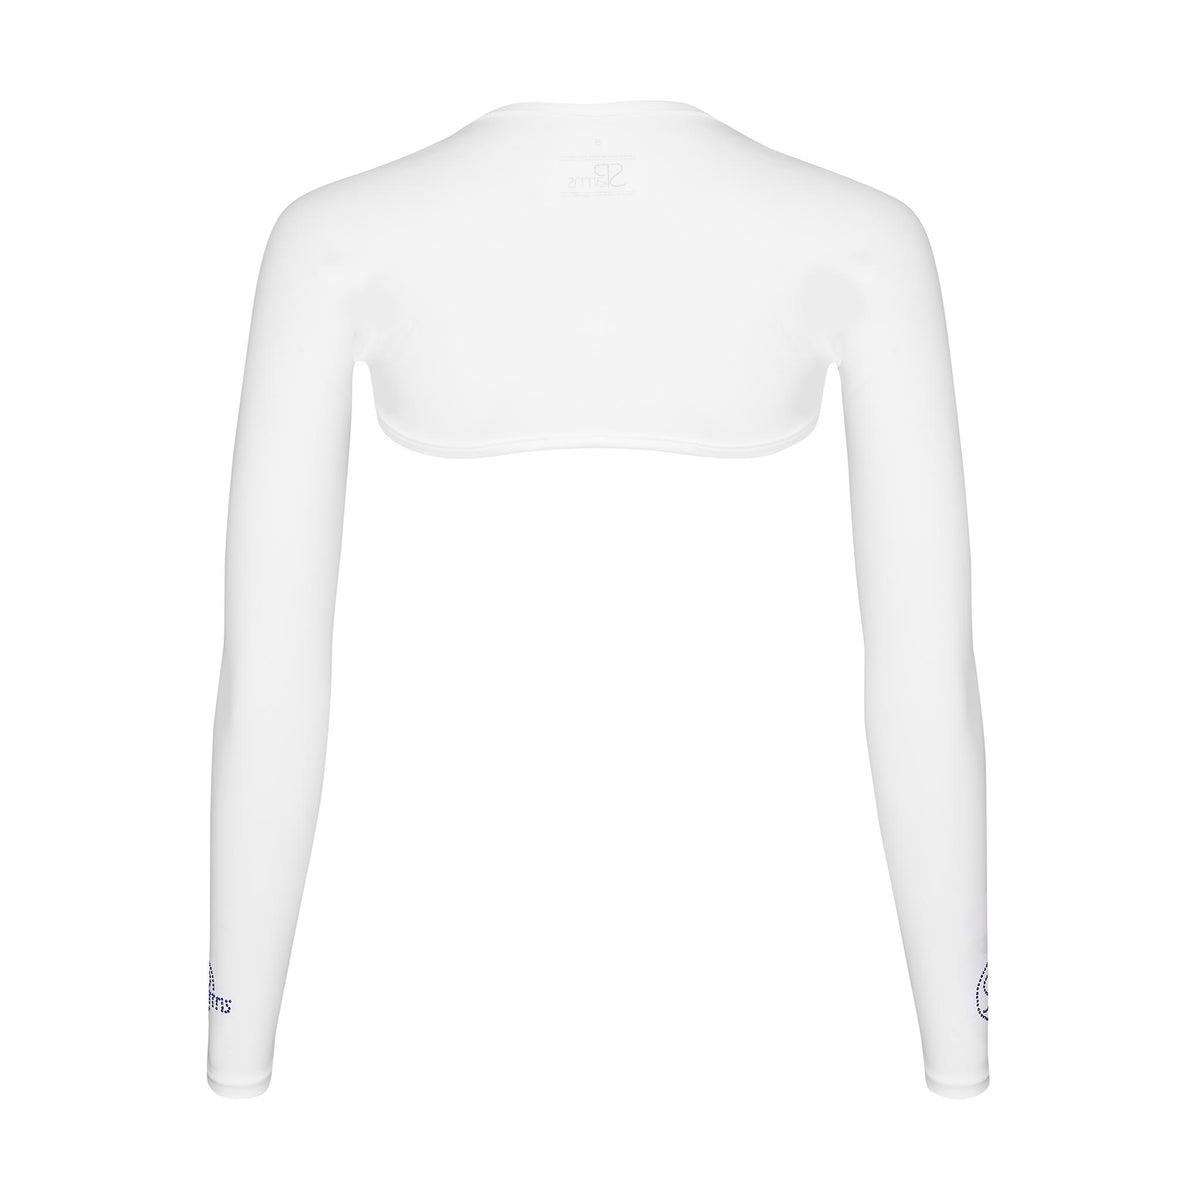 SP Arms - Shoulder Wrap (UV sleeves) - Crystal logo [White Shawl]